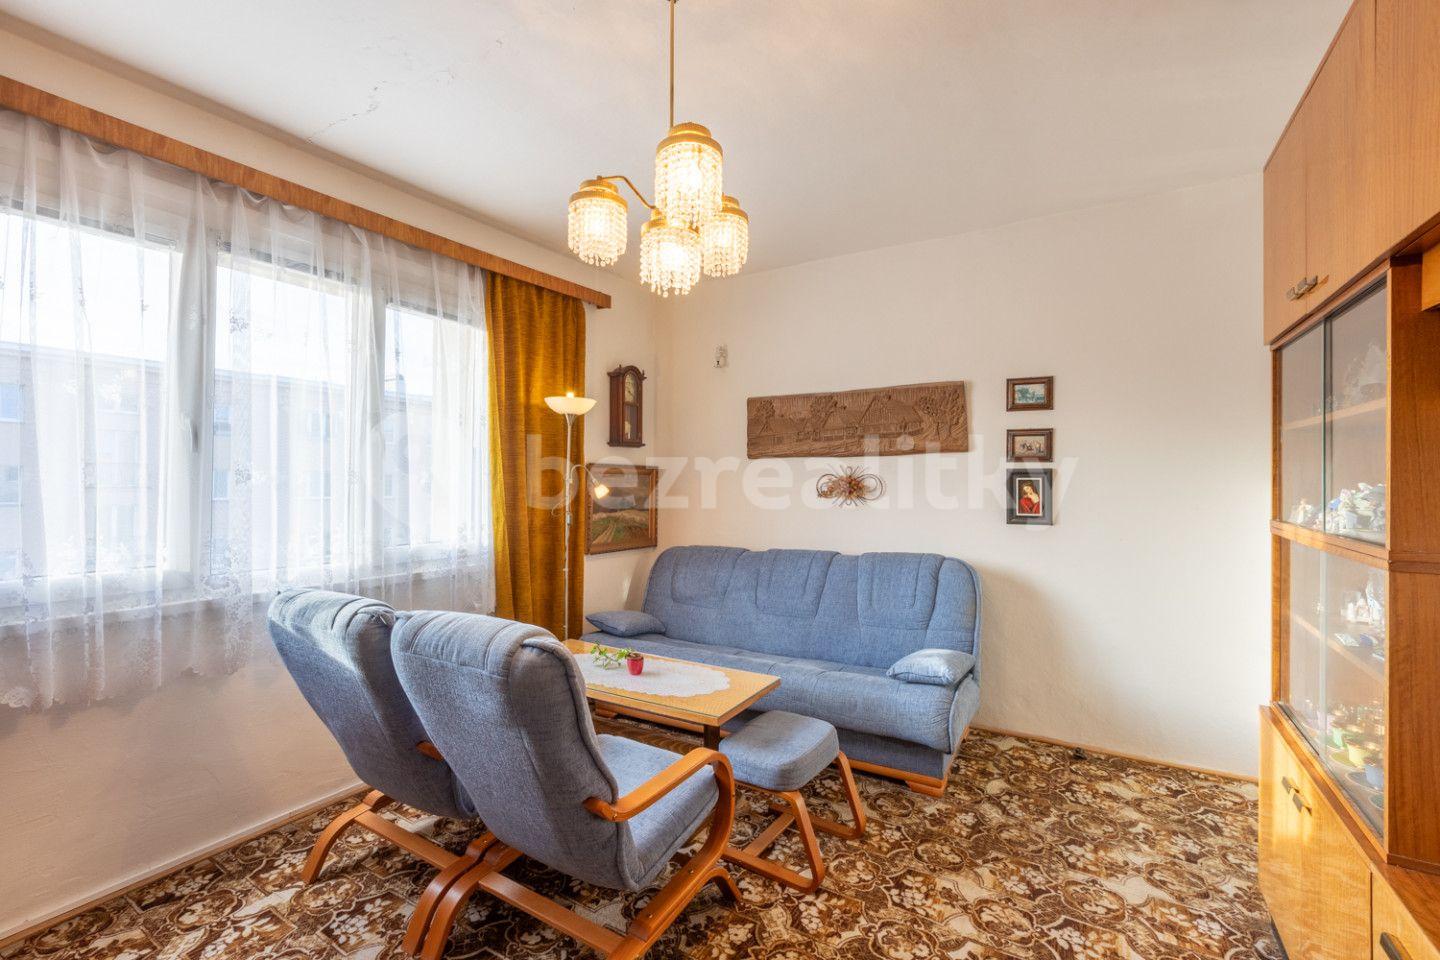 3 bedroom flat for sale, 69 m², Blažíčkova, Prague, Prague